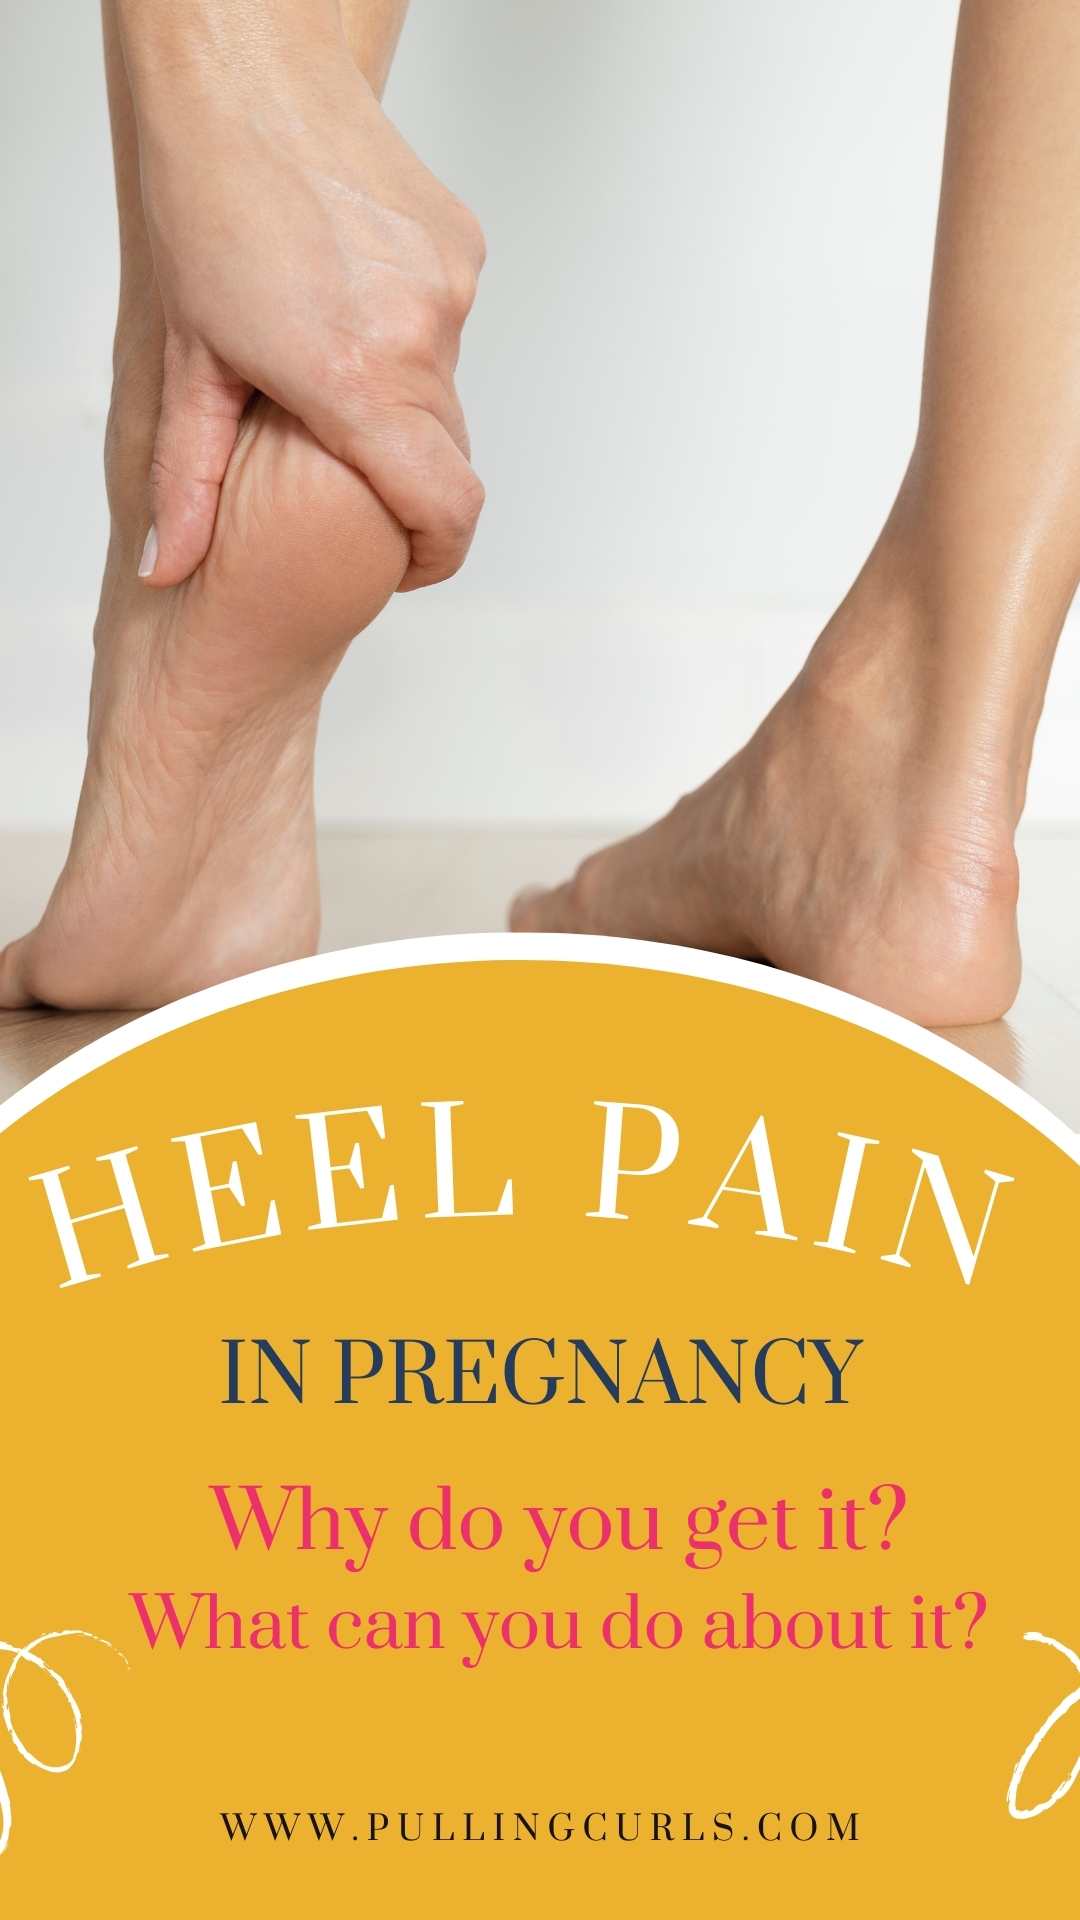 Heel Pain During Pregnancy via @pullingcurls